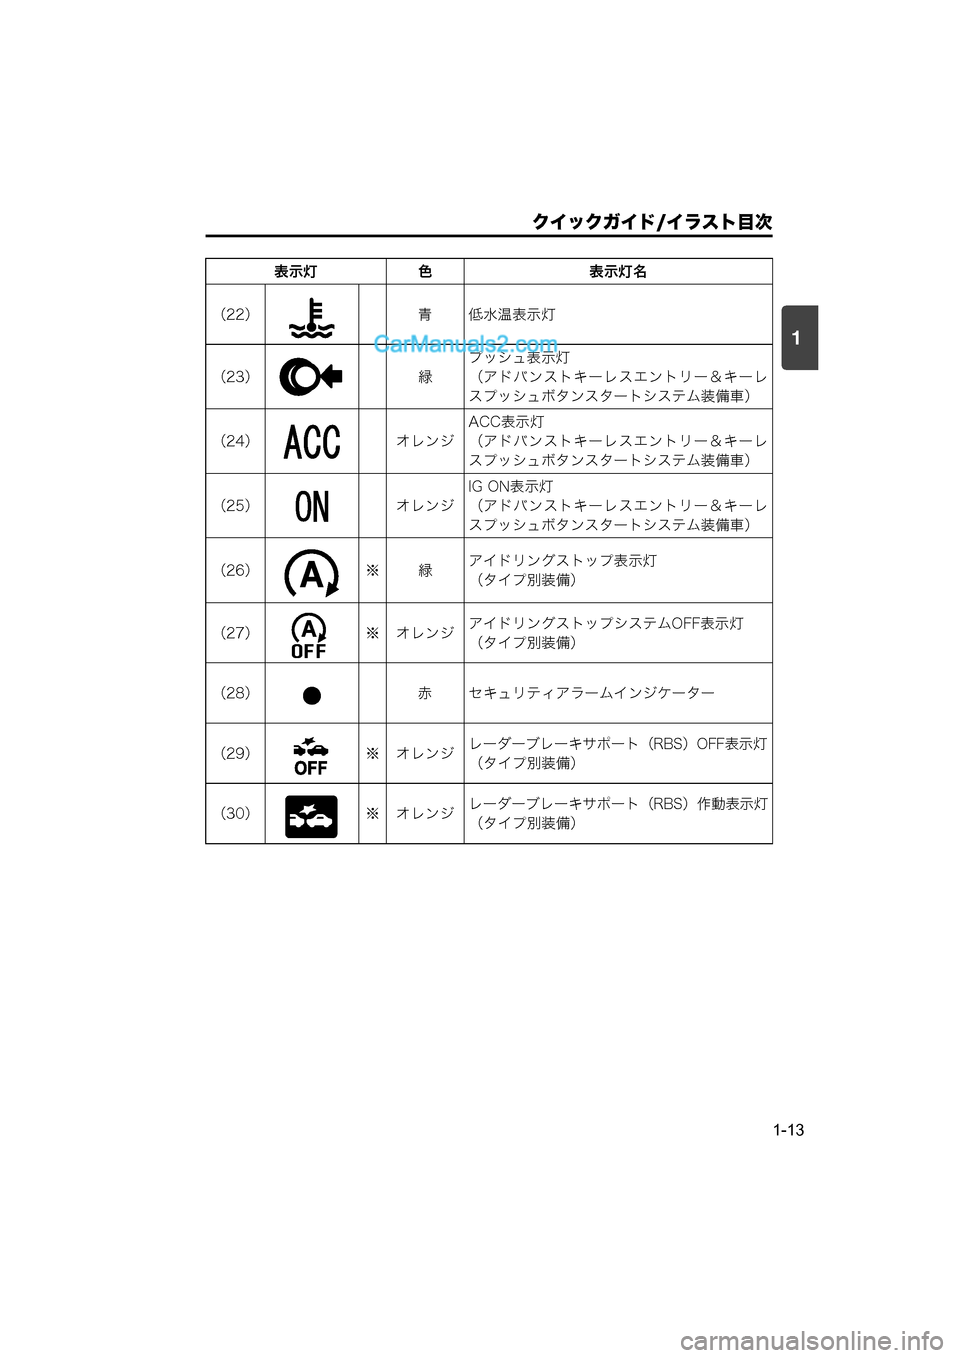 MAZDA MODEL CARROL 2015  取扱説明書 (キャロル) (in Japanese) 1
クイックガイド/イラスト目次
1-13
（22）青 低水温表示灯
（23） 緑プッシュ表示灯
（アドバンストキーレスエントリー＆キーレ
スプッシュボタン�